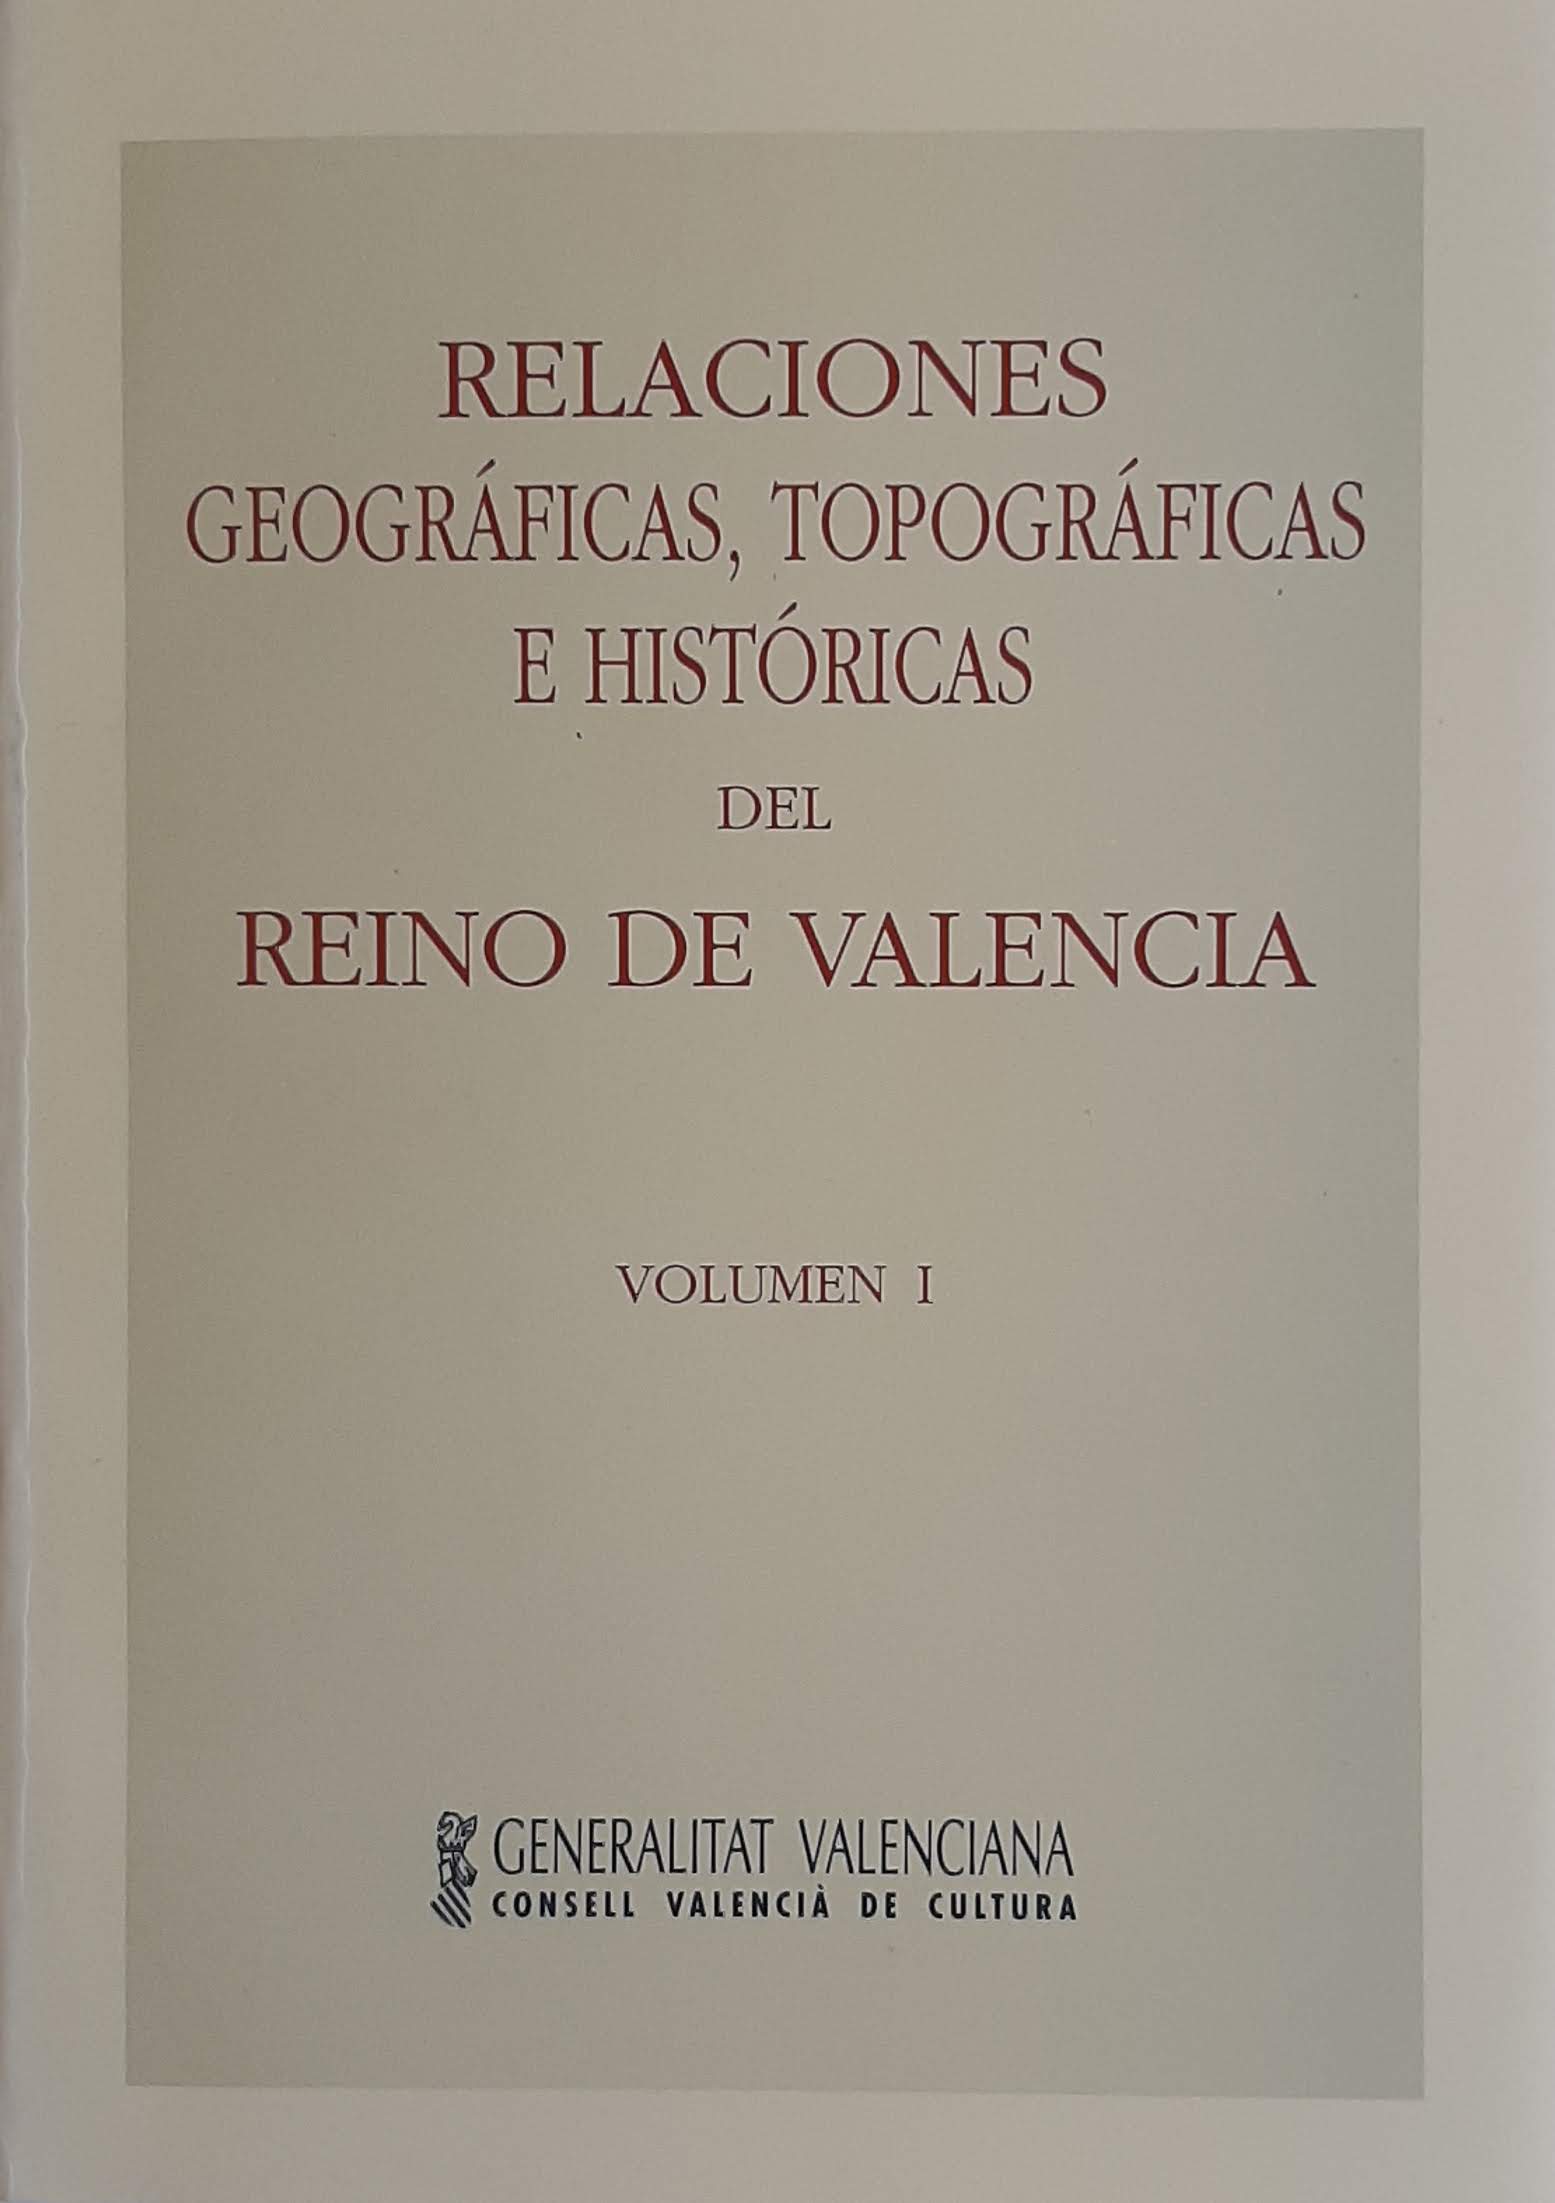 Relaciones geográficas, topográficas e históricas del Reino de Valencia. Volumen I